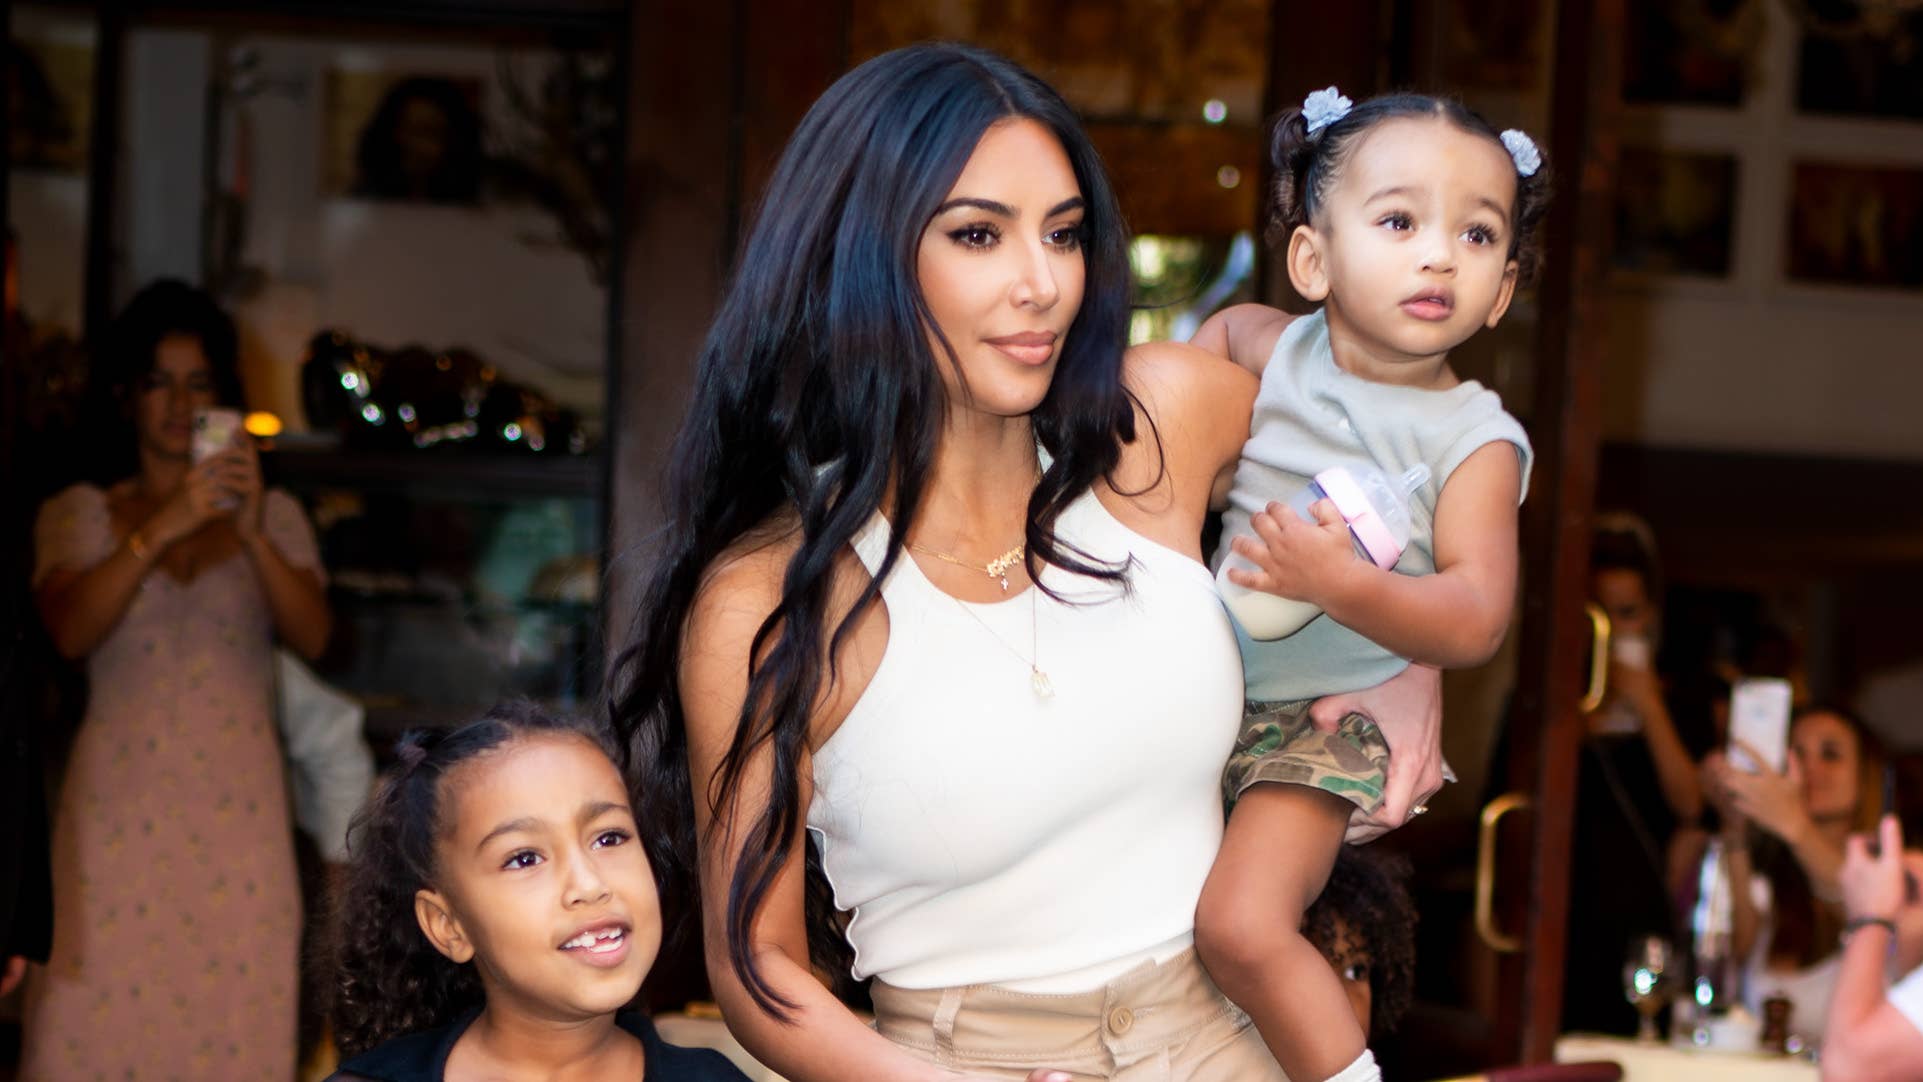 Kim Kardashian shows off her massive walk-in closet stuffed with